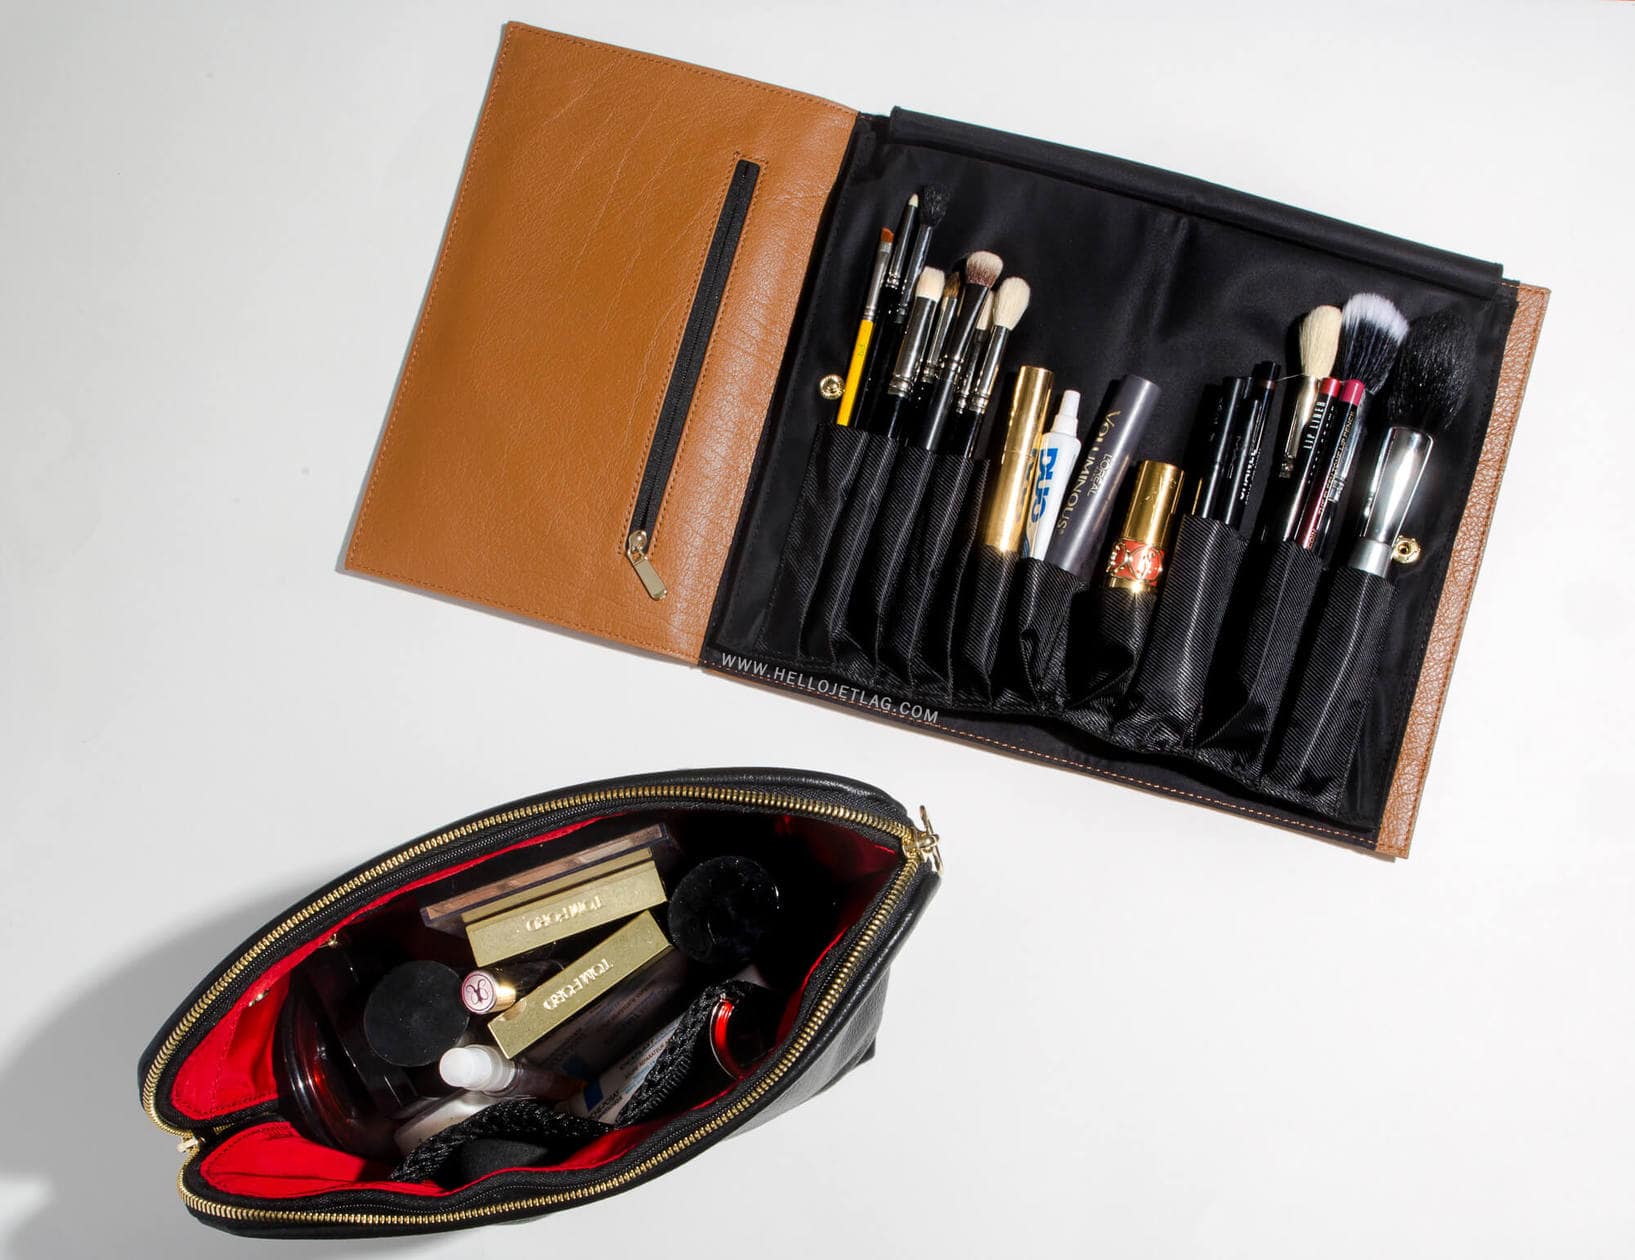 CHANEL, Makeup, Vintage Chanel Makeup Brush Set With Zip Case